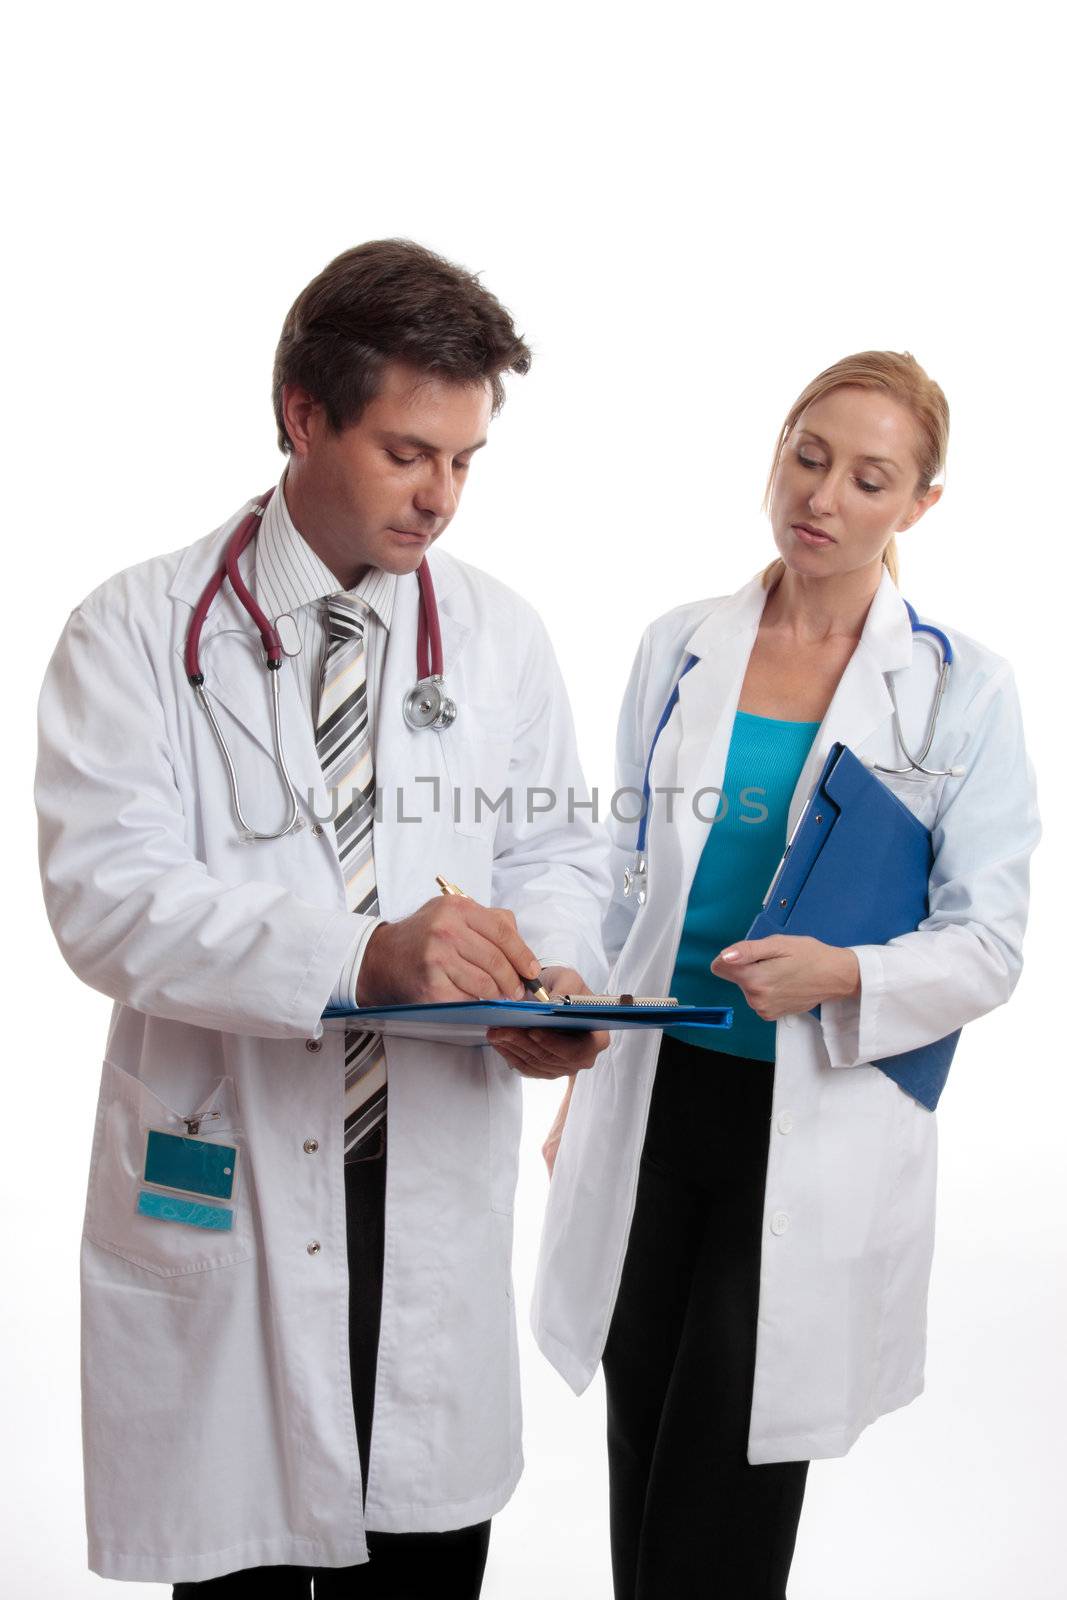 Two doctors discuss a patients medical ailment or treatment.